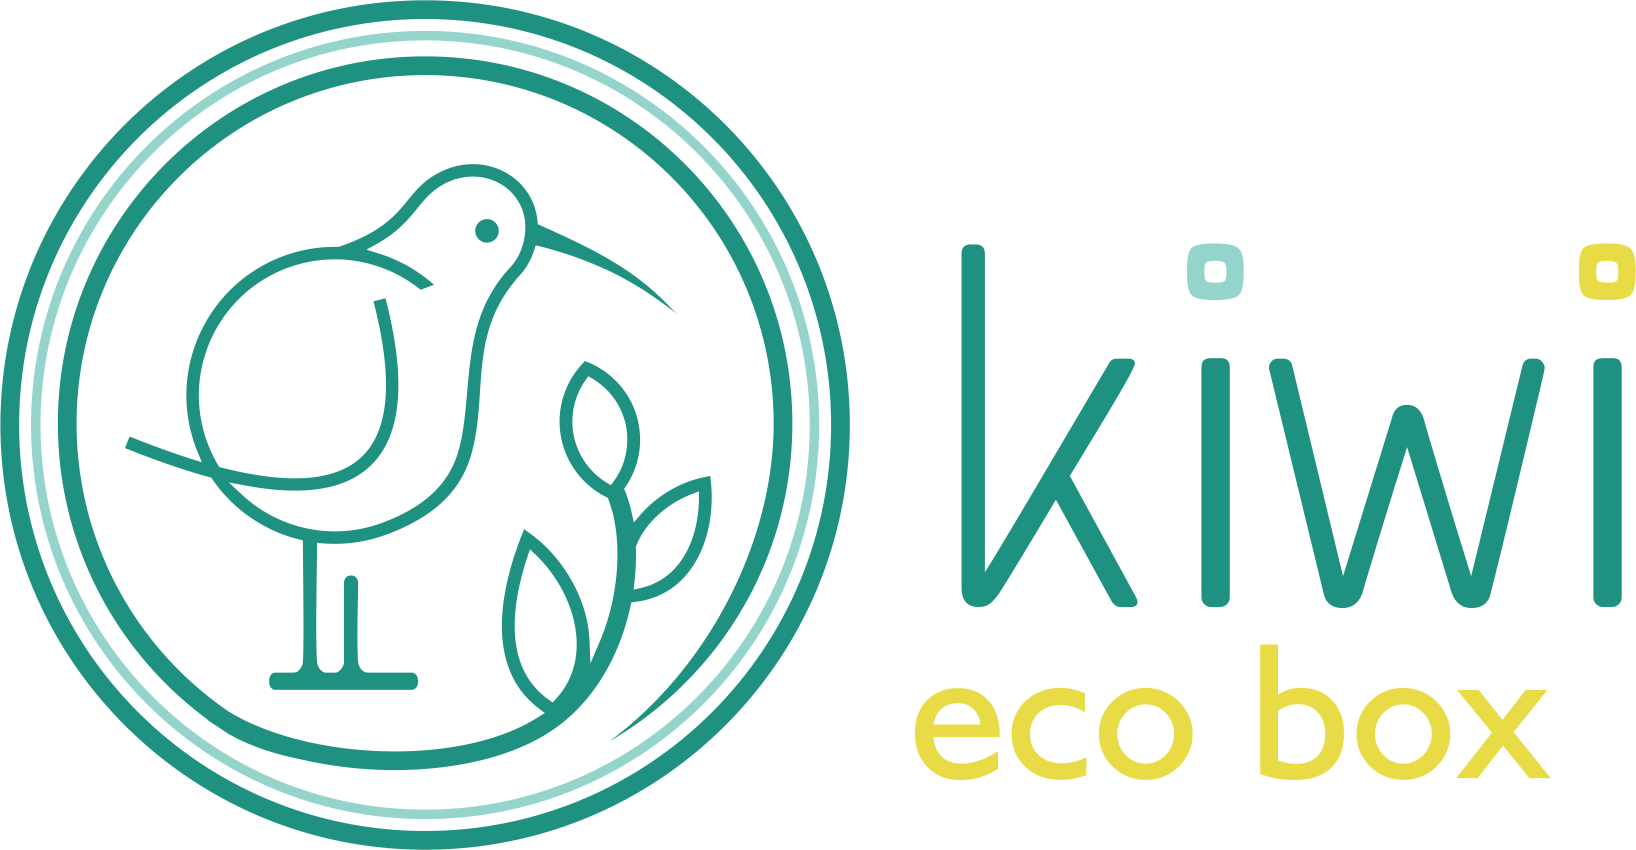 Kiwi eco box logo